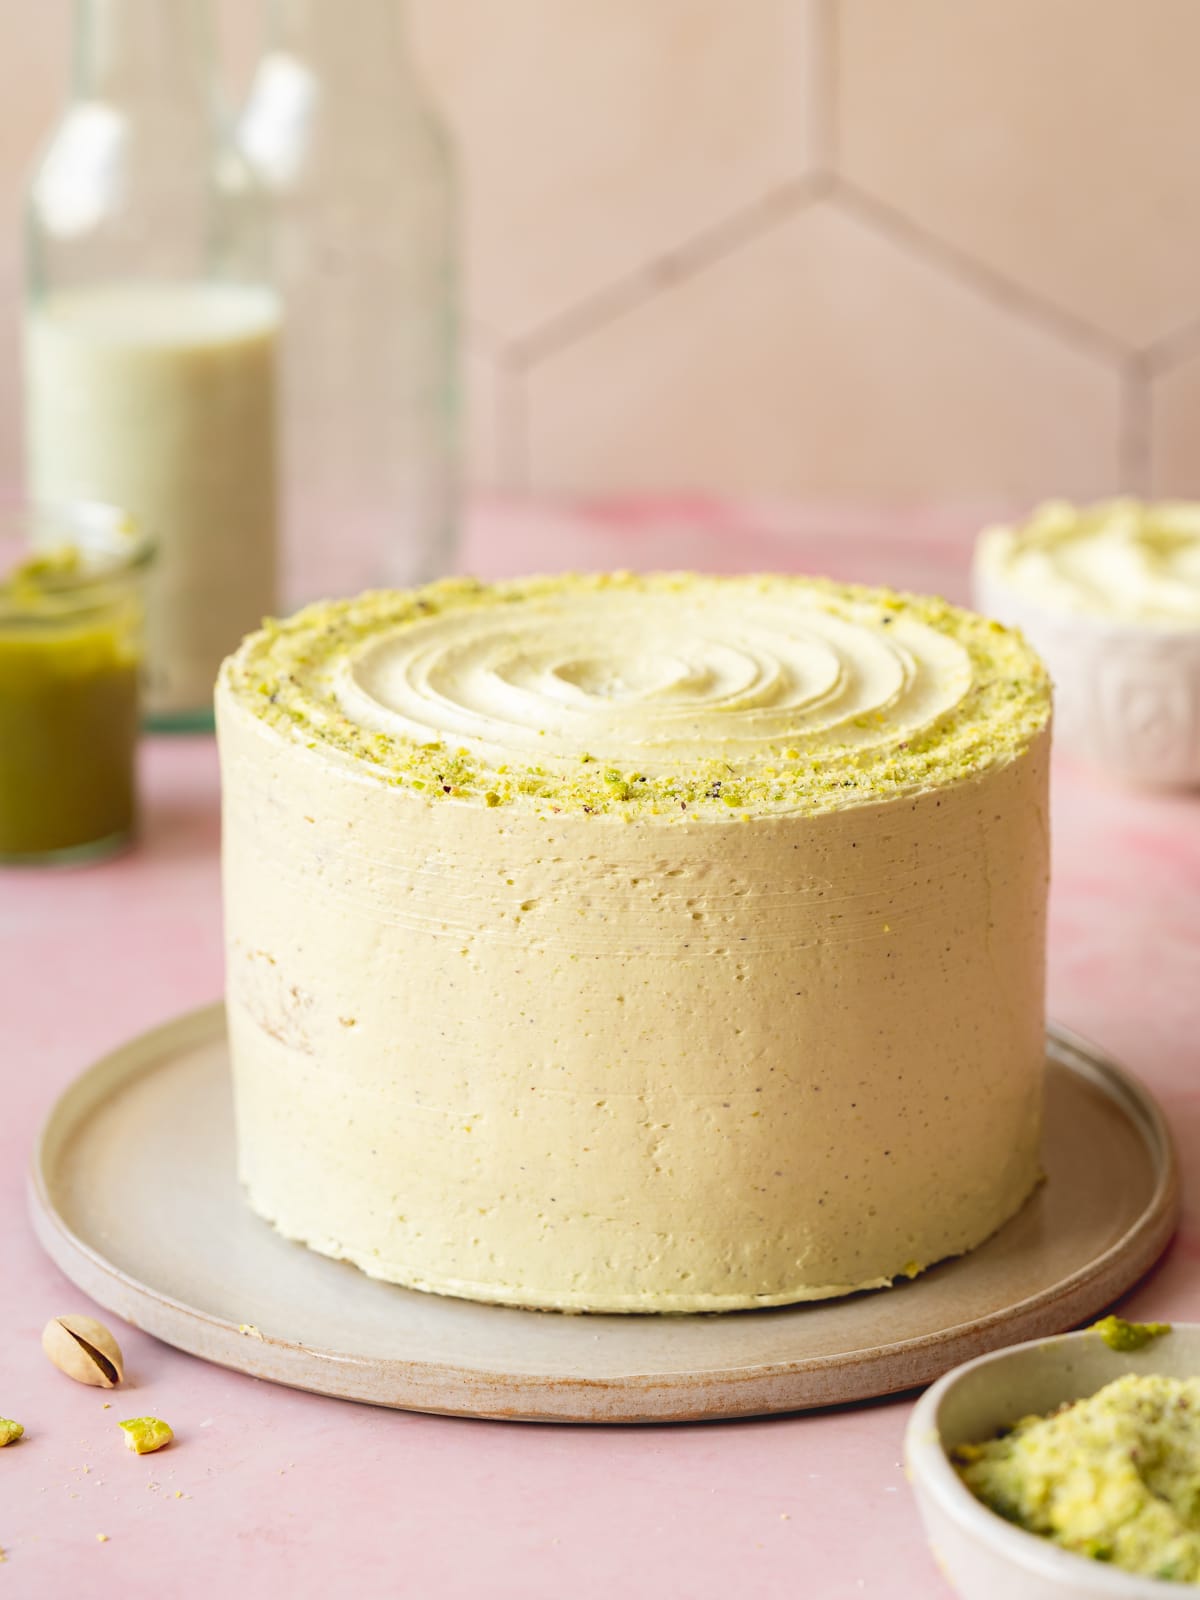 vegan pistachio cake coated in easy pistachio buttercream frosting on a ceramic plate.